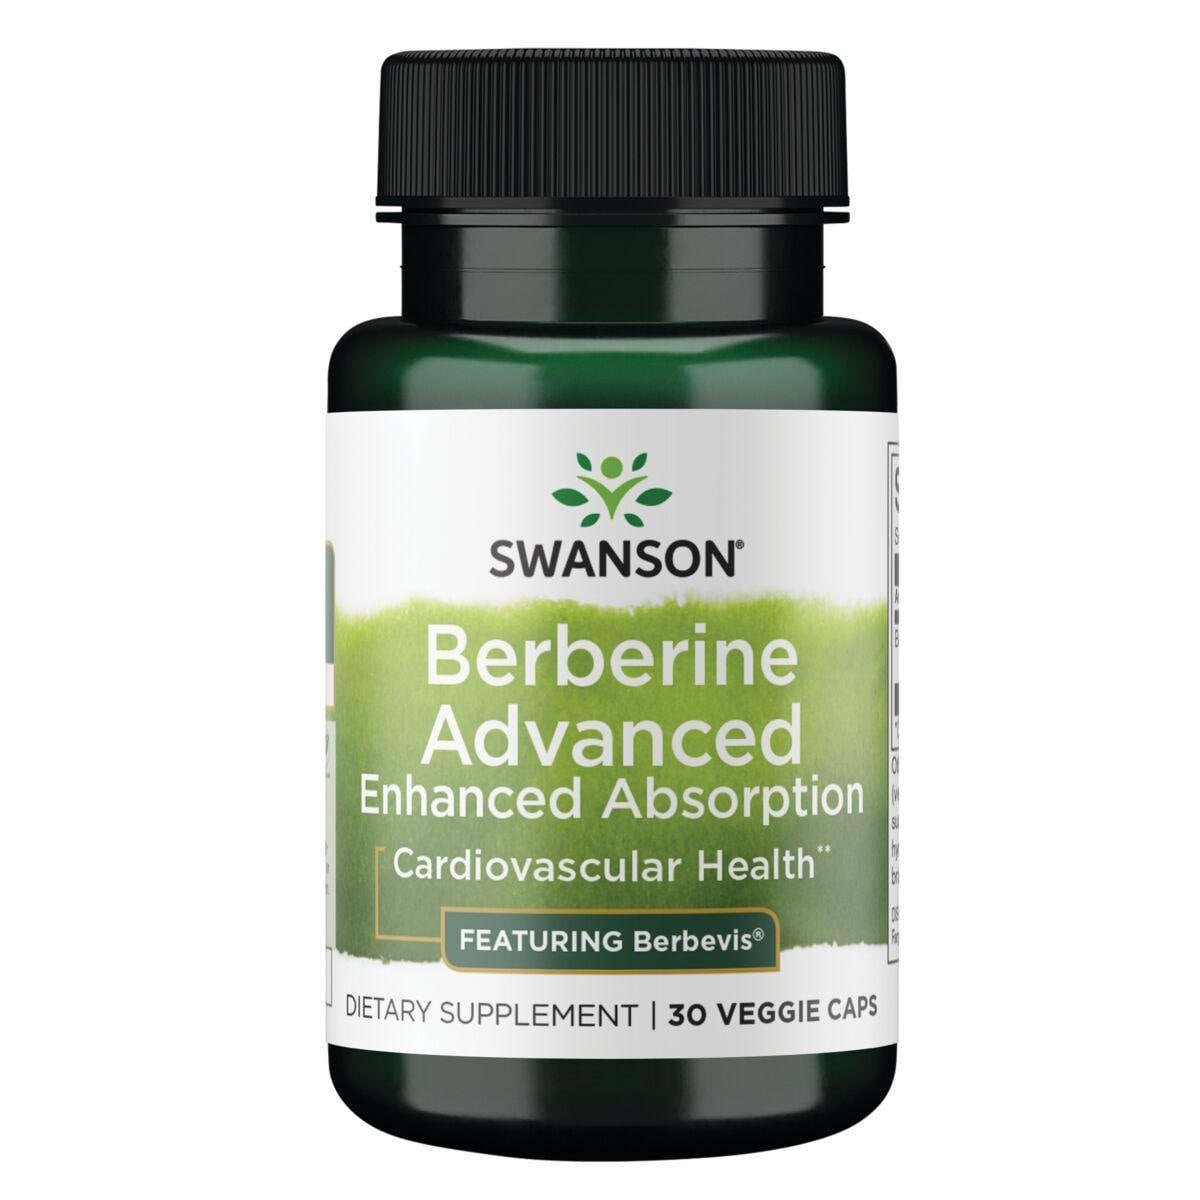 Swanson Premium Berberine Advanced Enhanced Absorption - Featuring Berbevis Vitamin 550 mg 30 Veg Caps